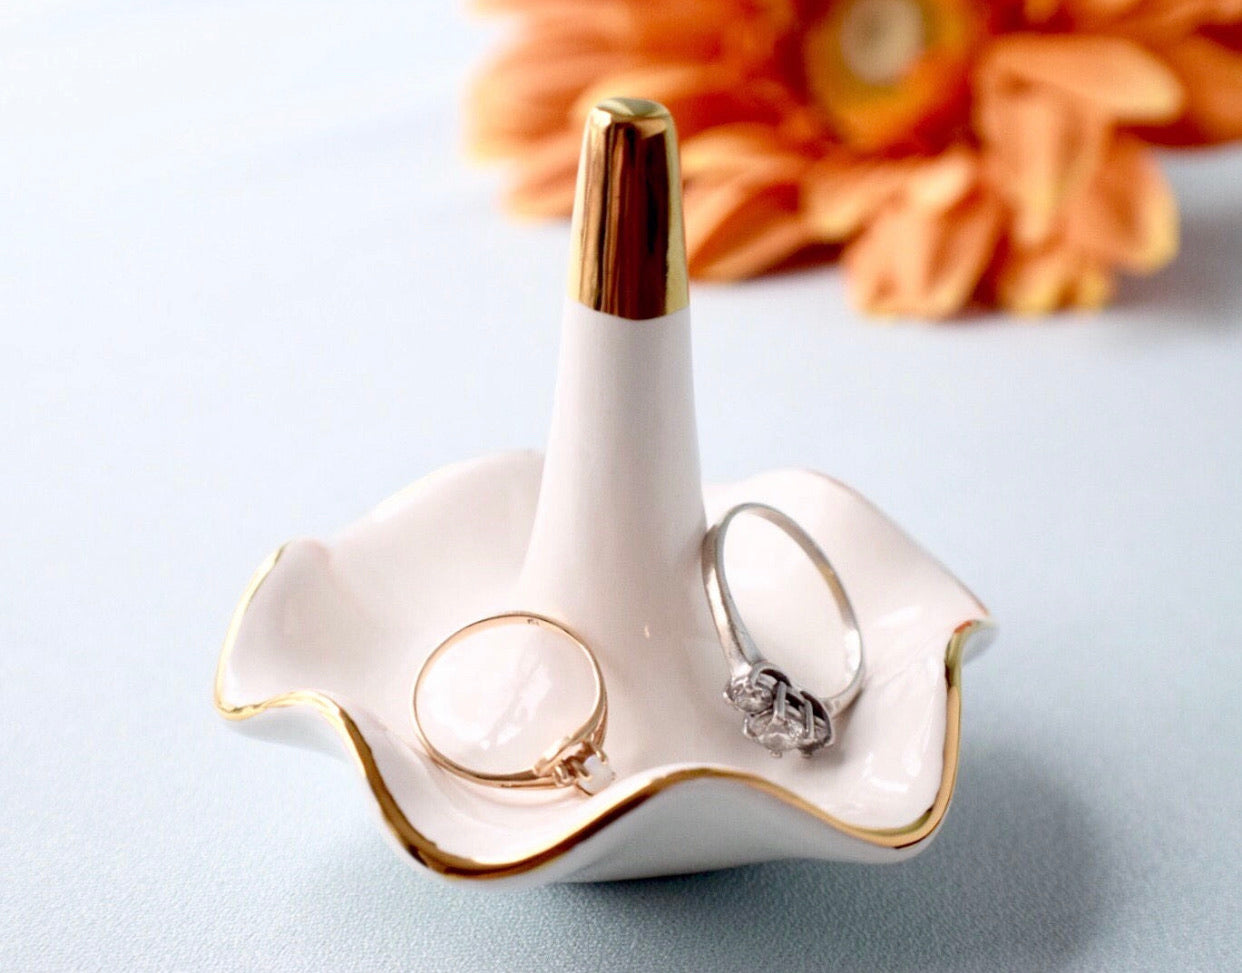 24 Carat Gold | Engagement Ring Dish